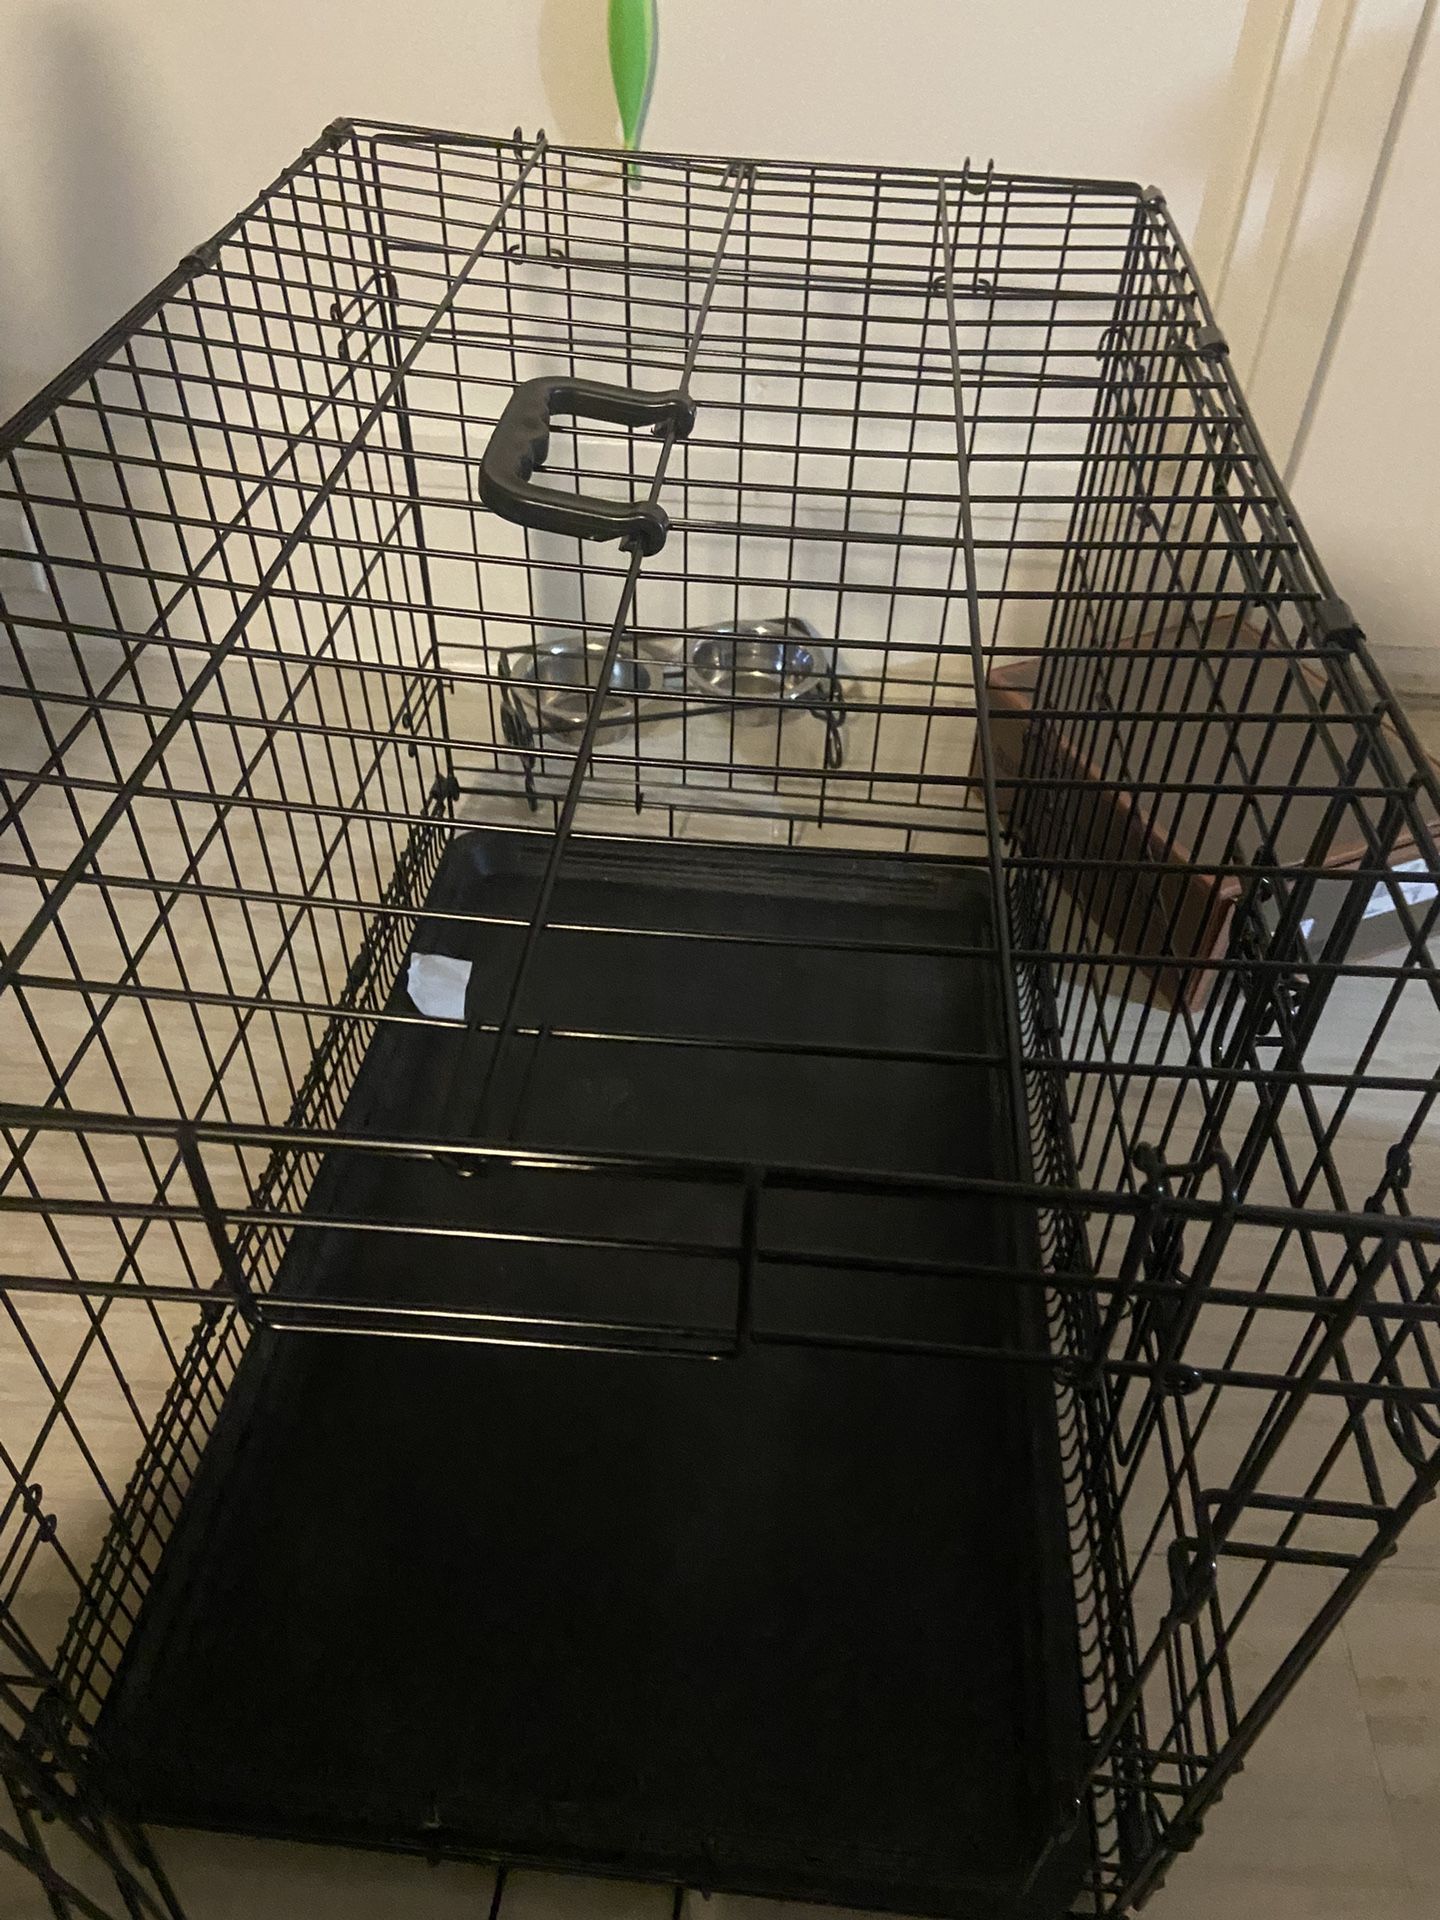 Small/medium Sized Dog Crate